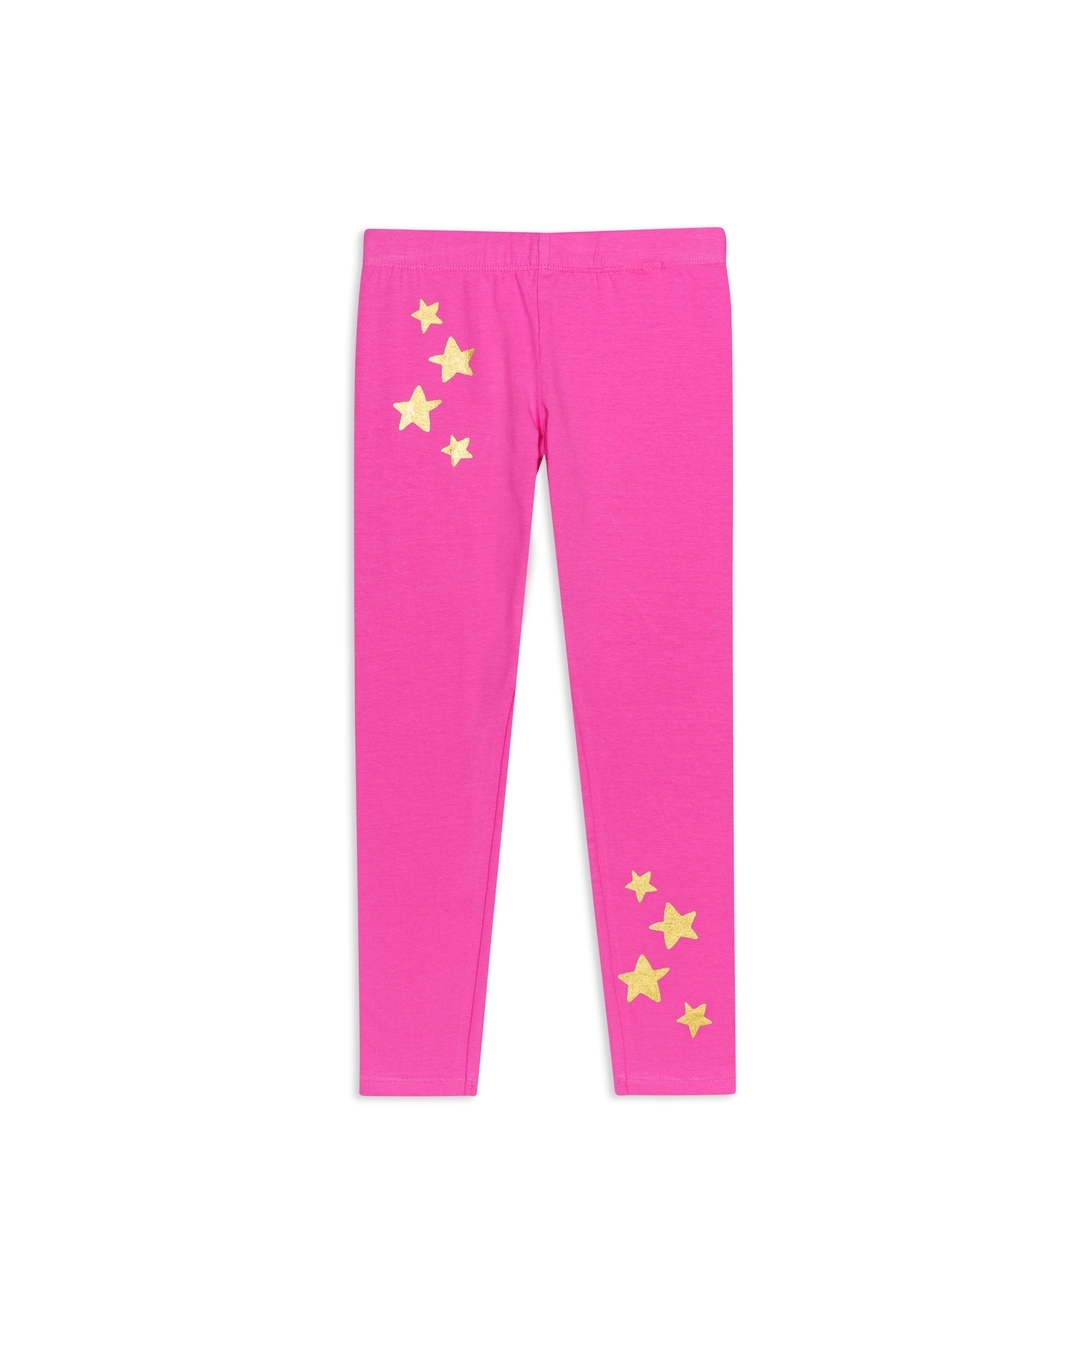 Buy Girls Legging -Pack Of 1-Pink Online at Best Price